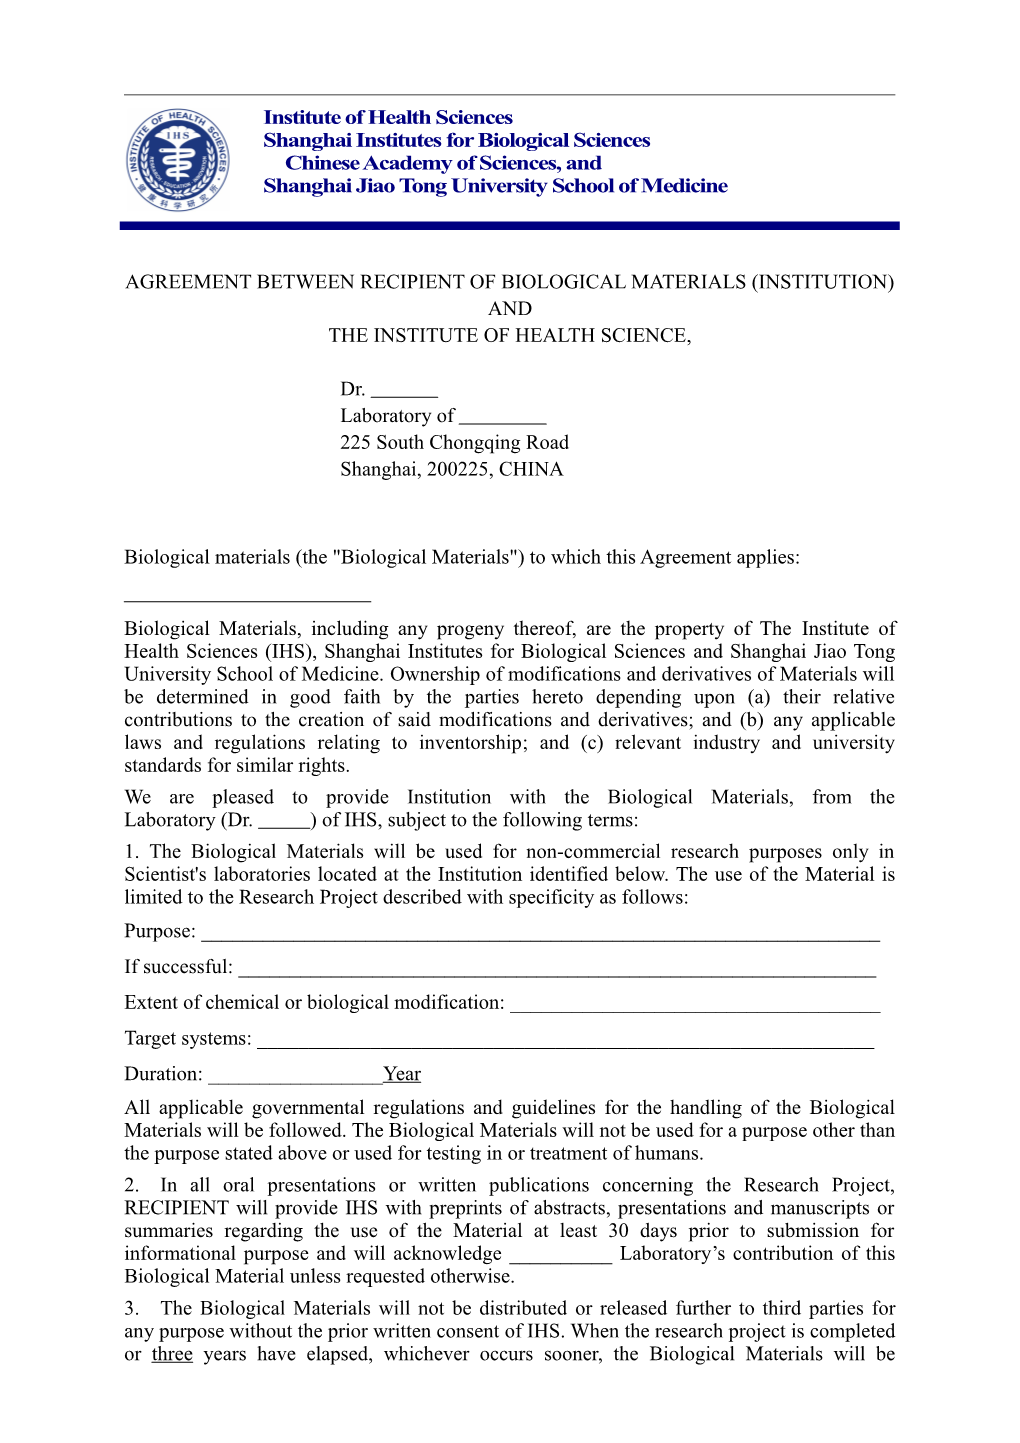 Agreement Between Recipient of Biological Materials (Institution)